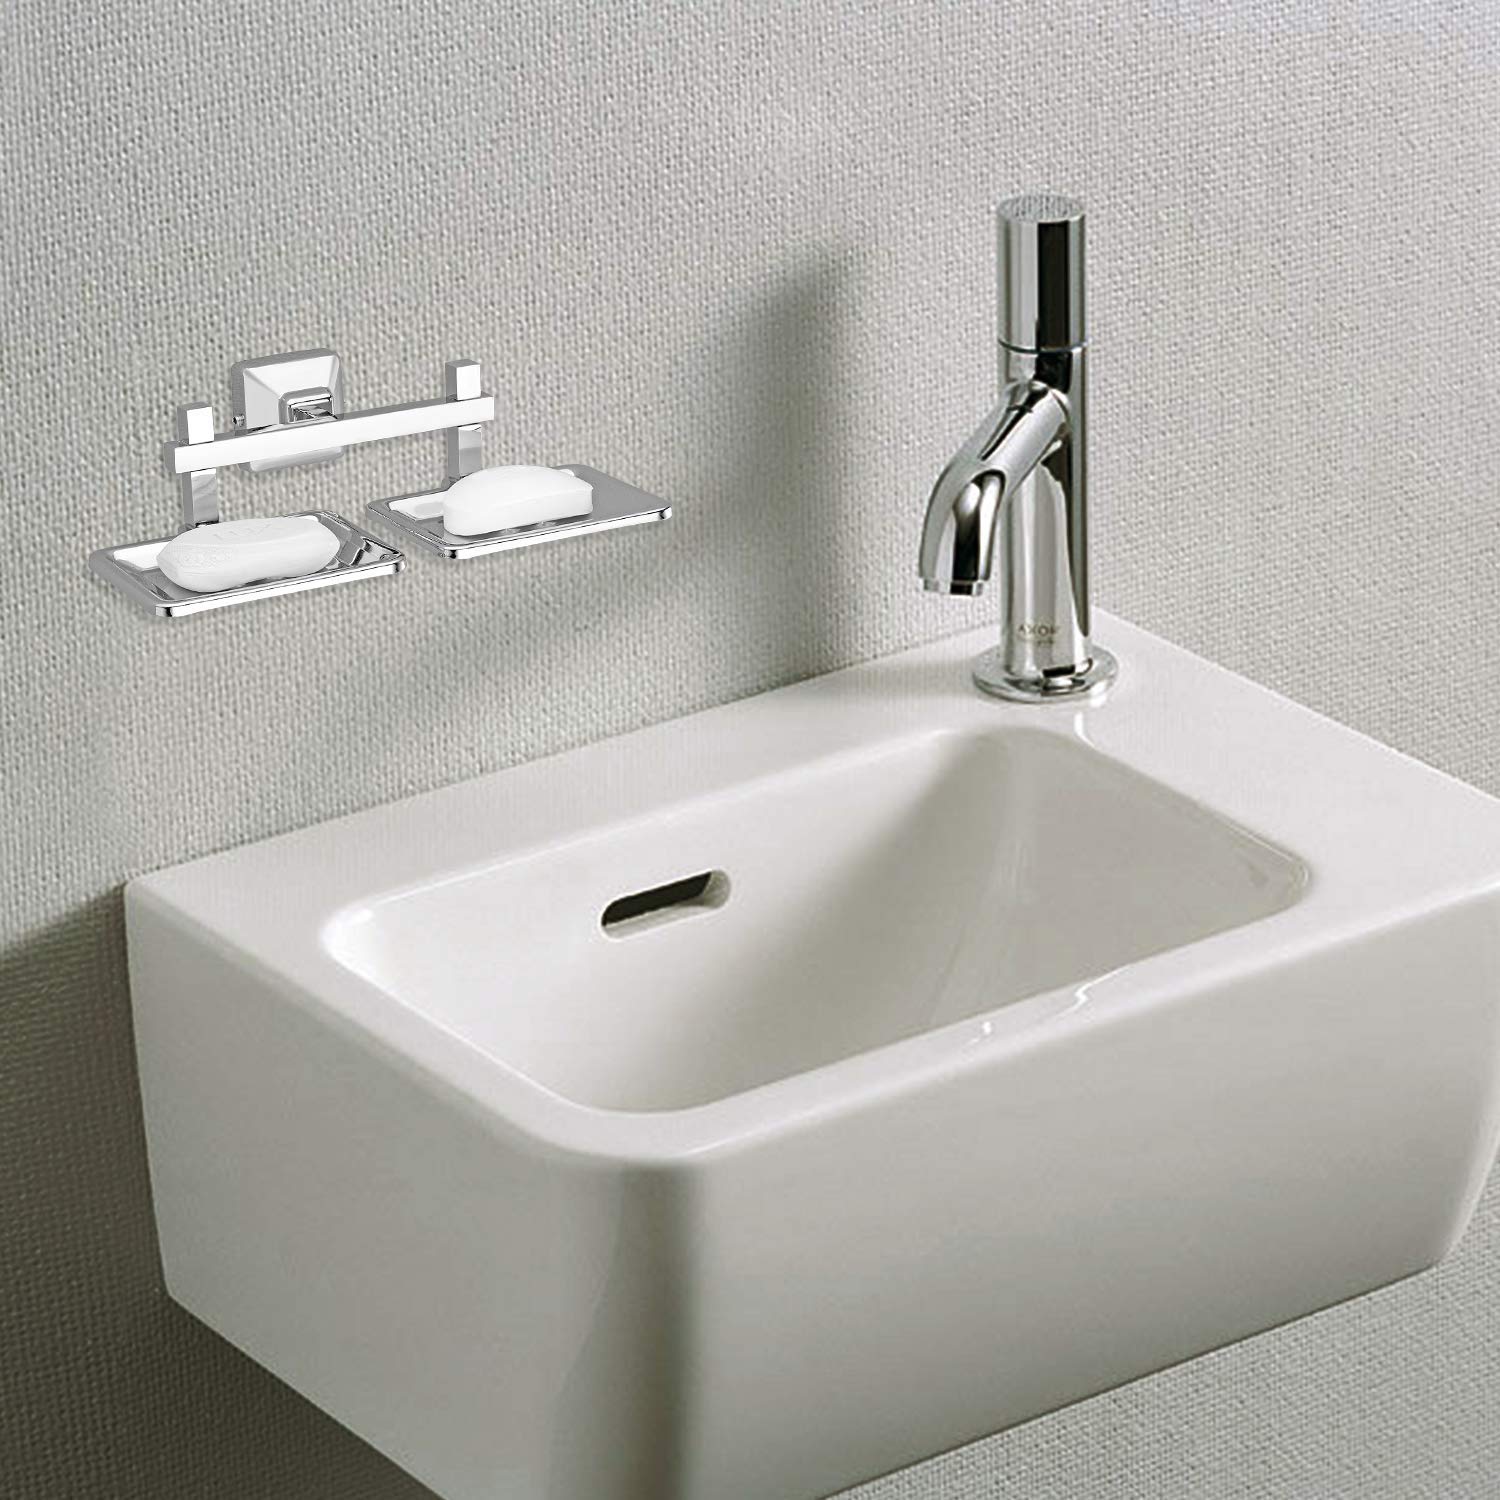 Plantex Stainless Steel 304 Grade Squaro Soap Holder for Bathroom/Double Soap Dish(Chrome) - Pack of 2